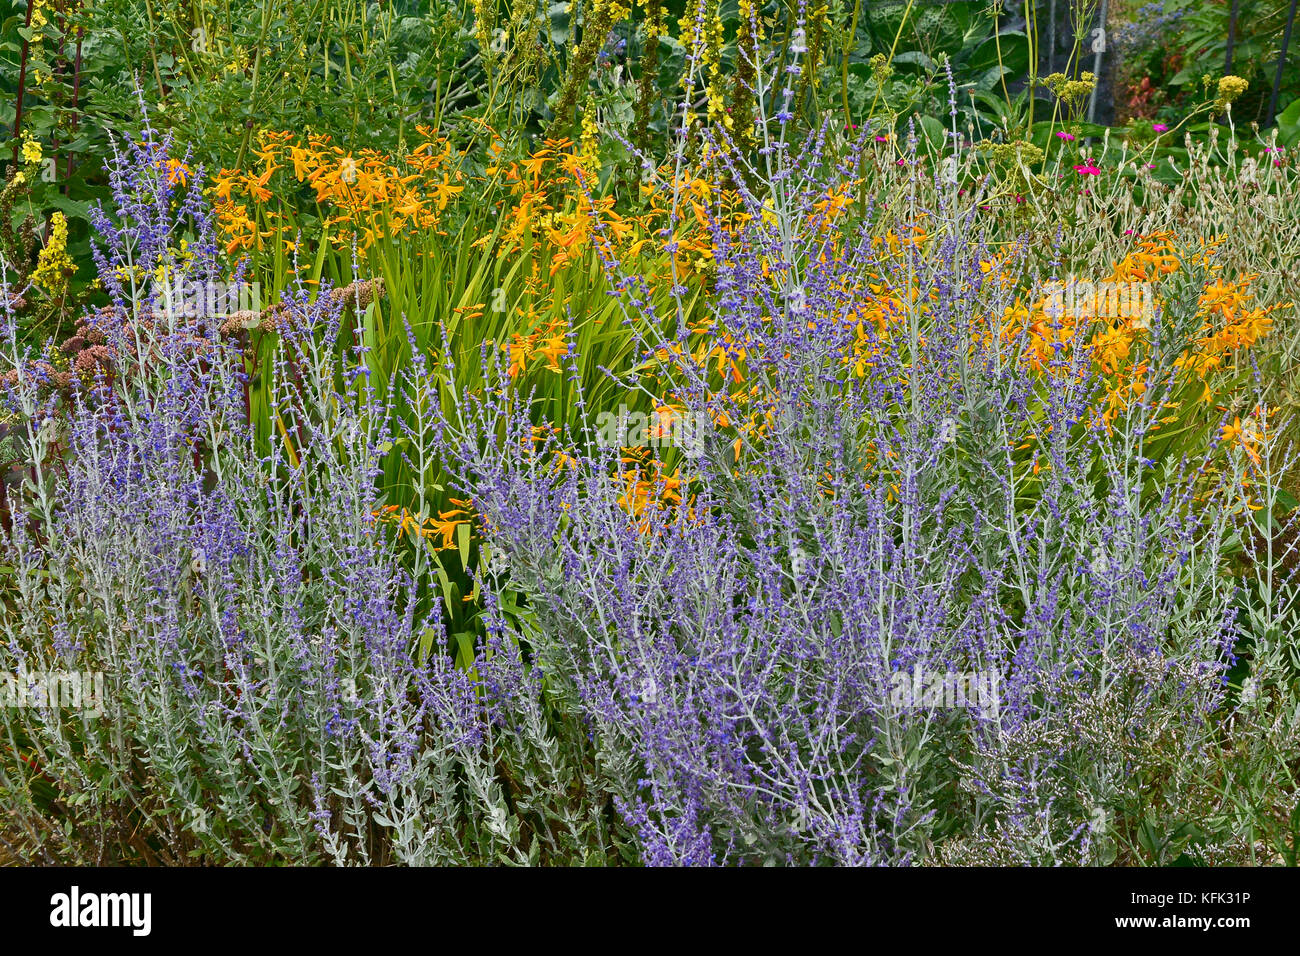 Garden flower border with Perovskia, Crocosmia making a colourful display Stock Photo